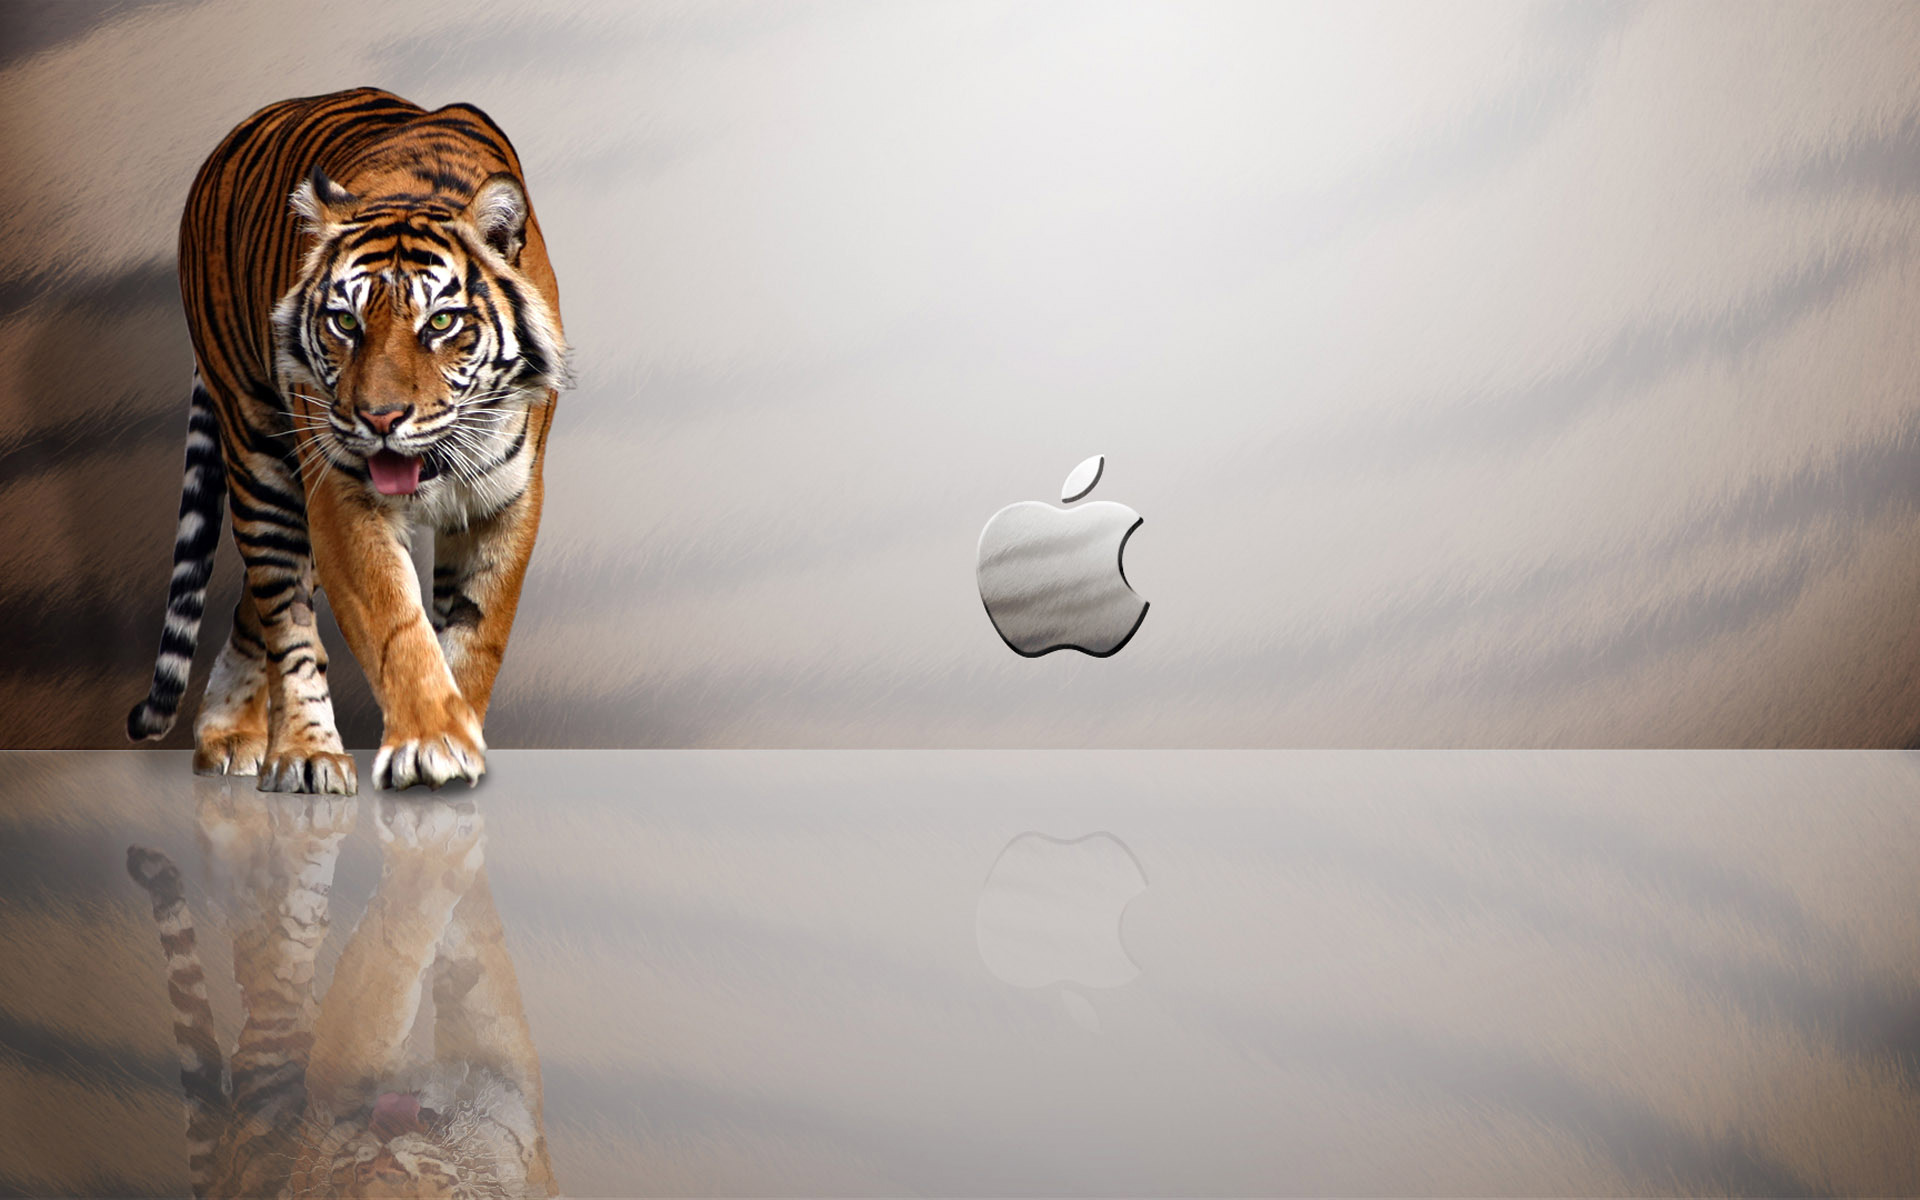 Apple Tiger Mac OS desktop hd wallpaper High Quality Wallpapers